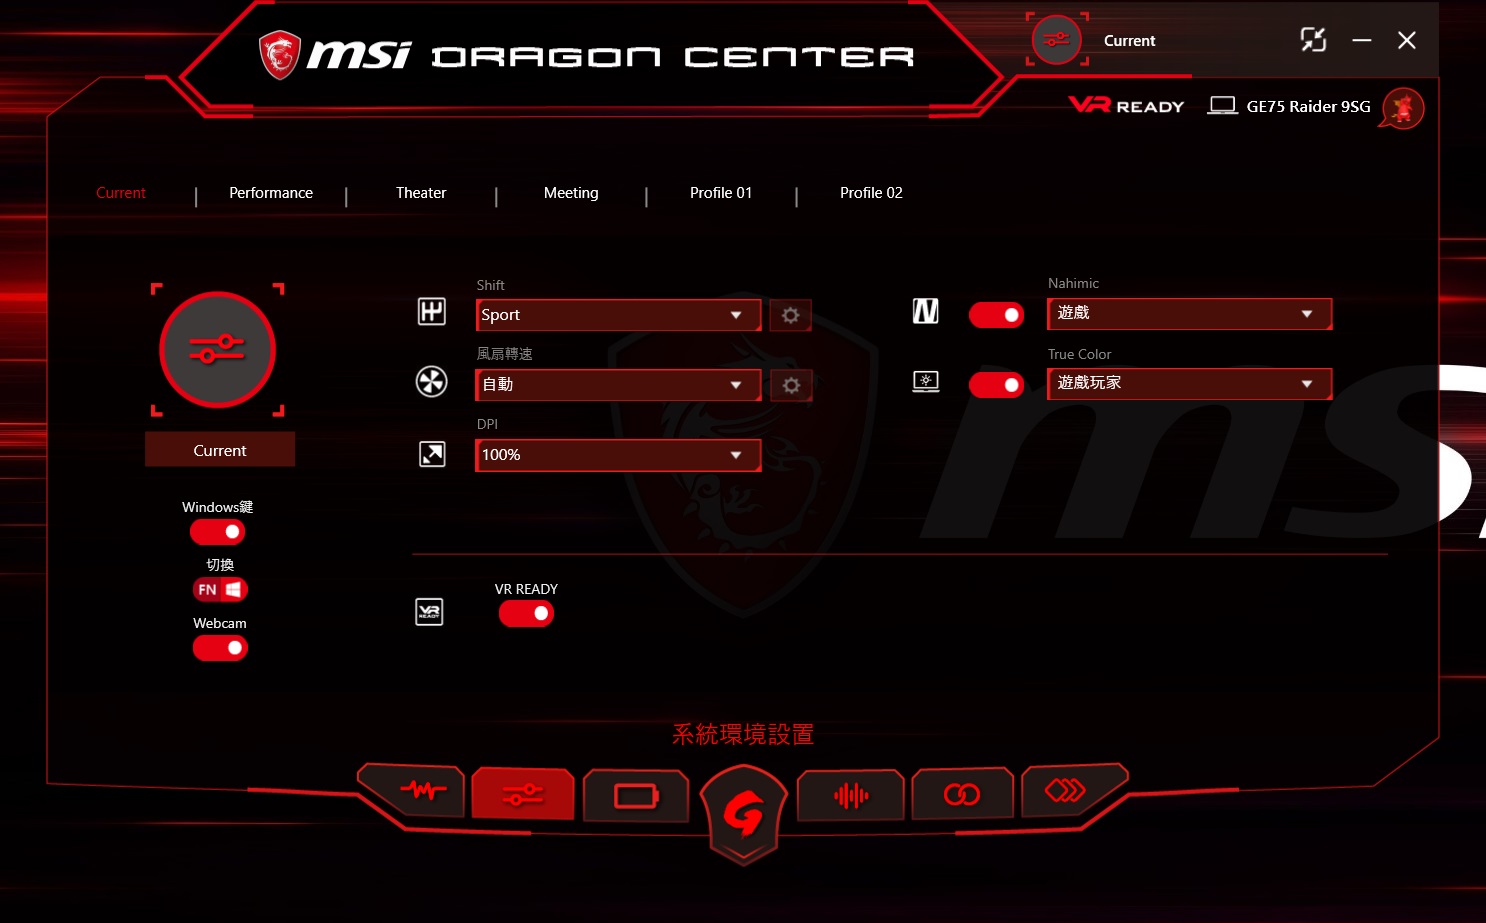 msi dragon center latest version